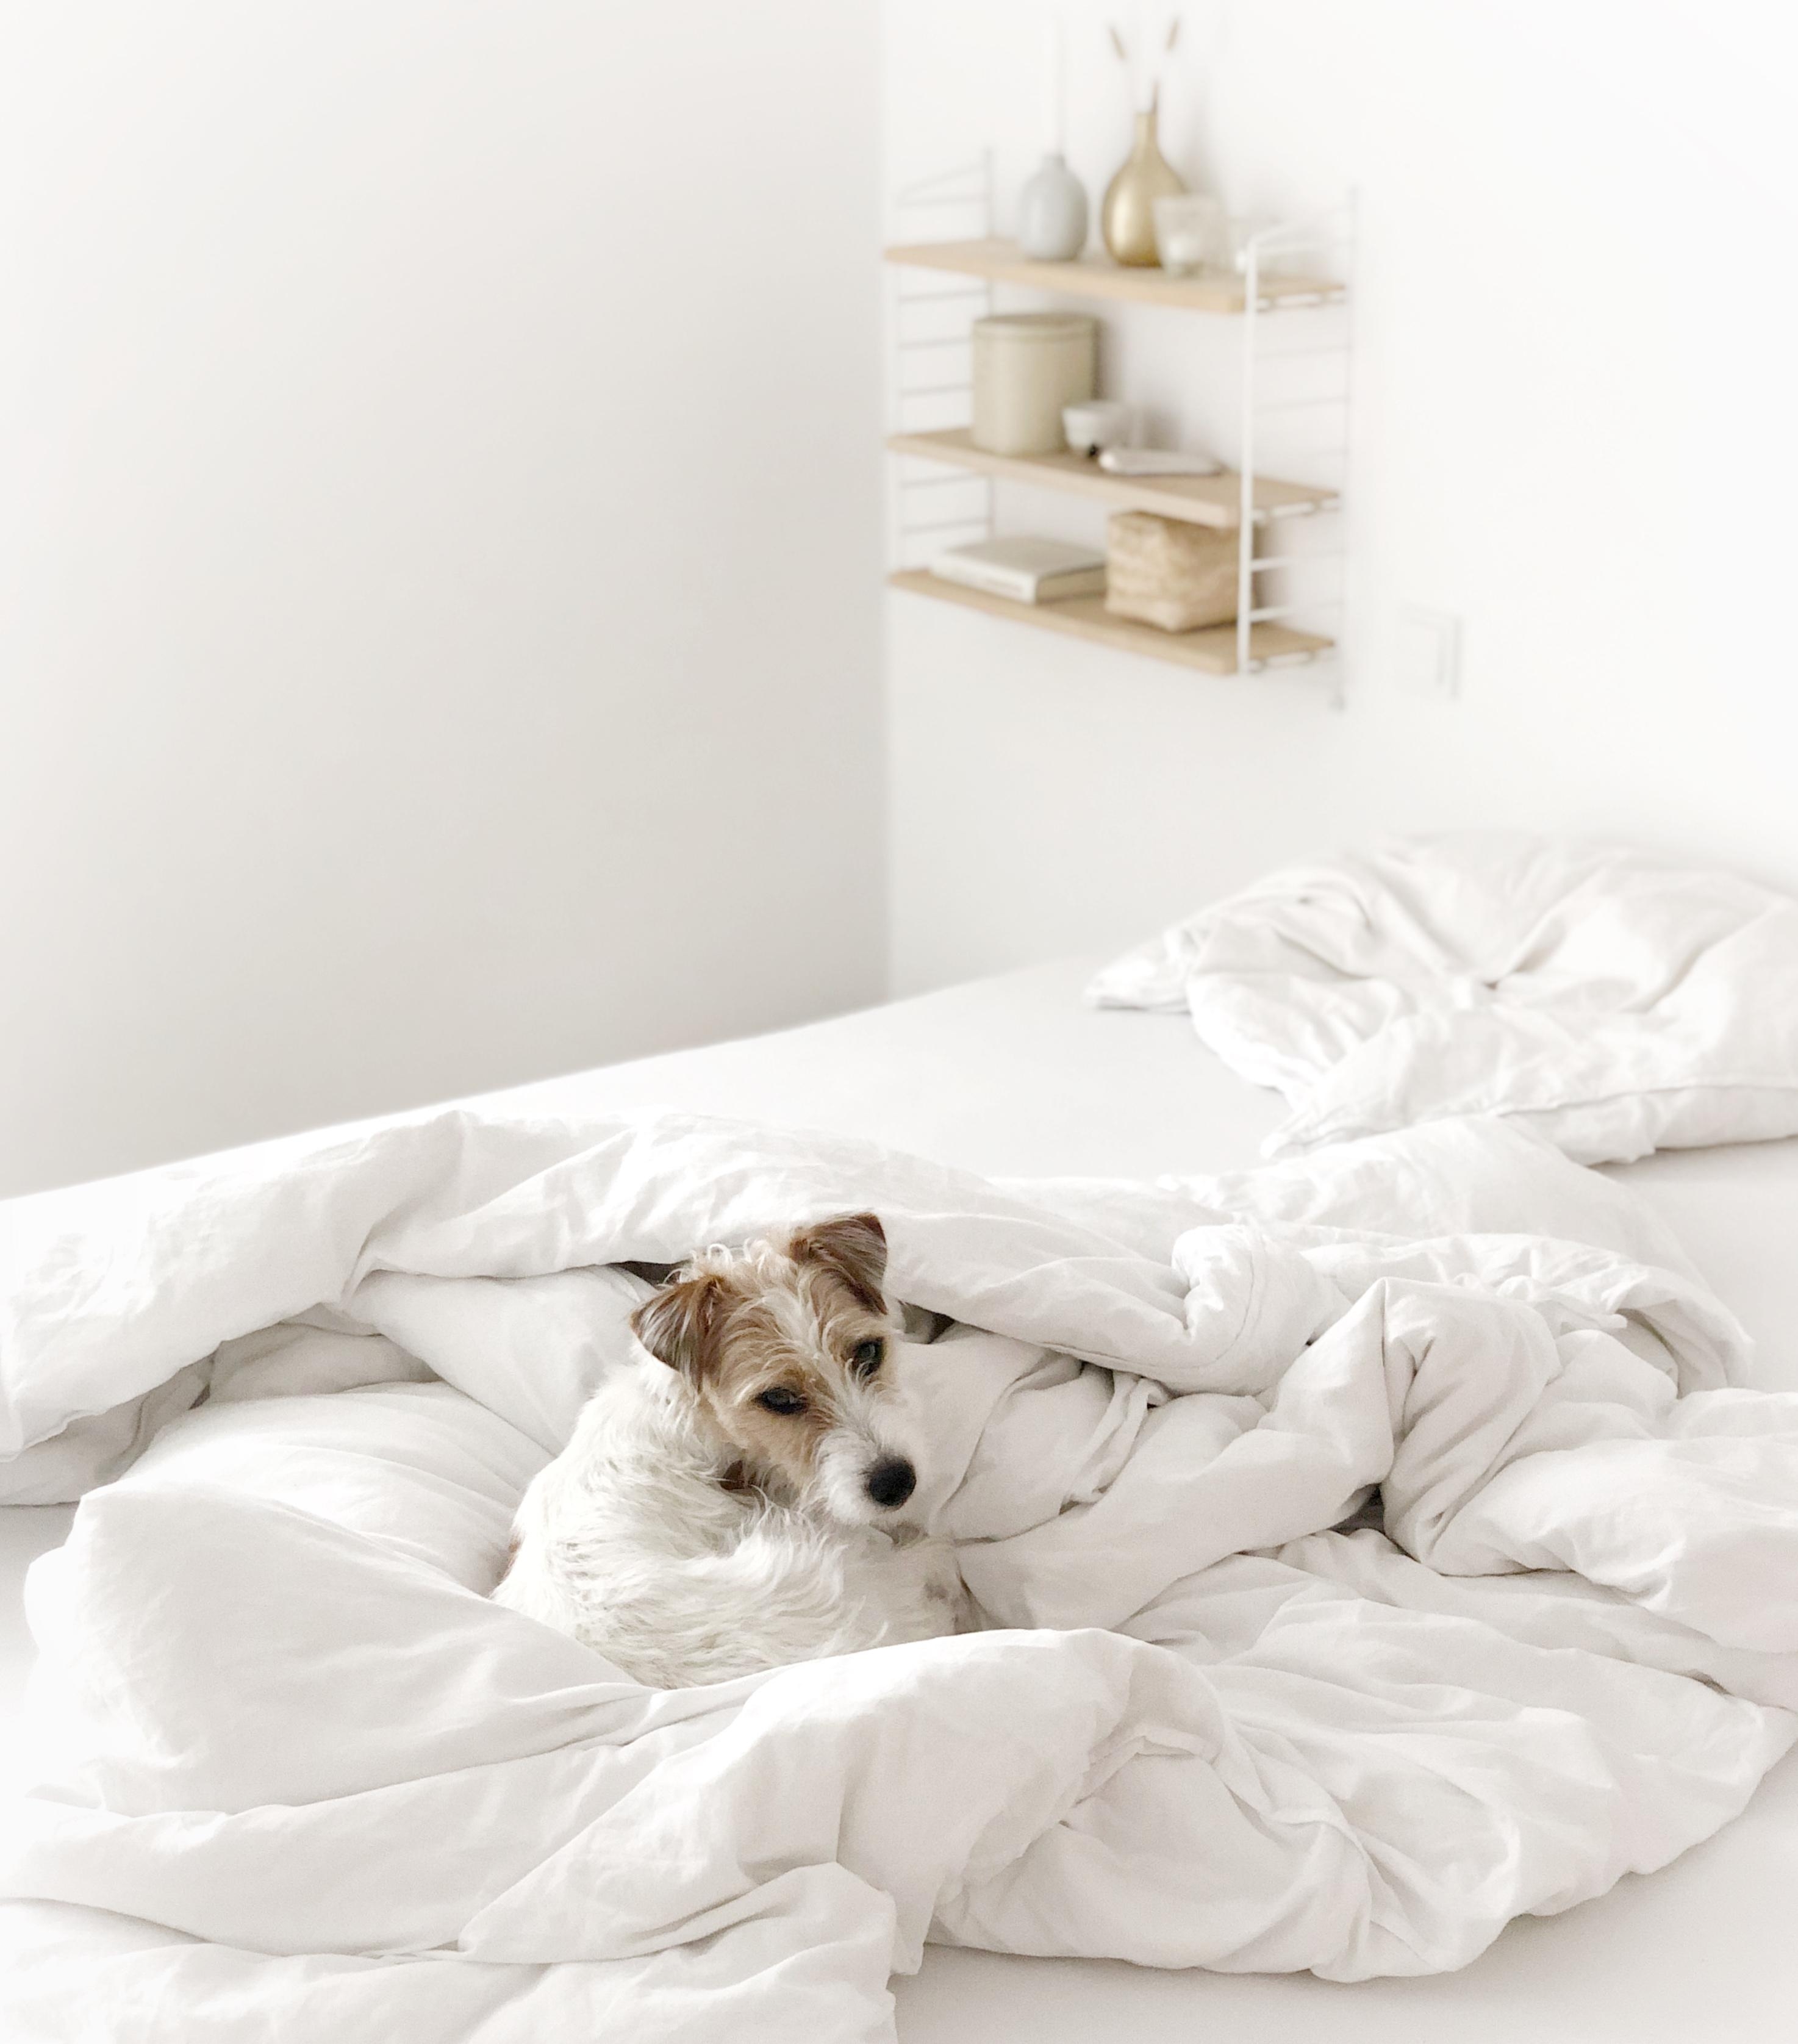 Lazy Morning!
#whitehome#livingwithadog#doglove#doglive#whiteinterior#natural#whiteandwood